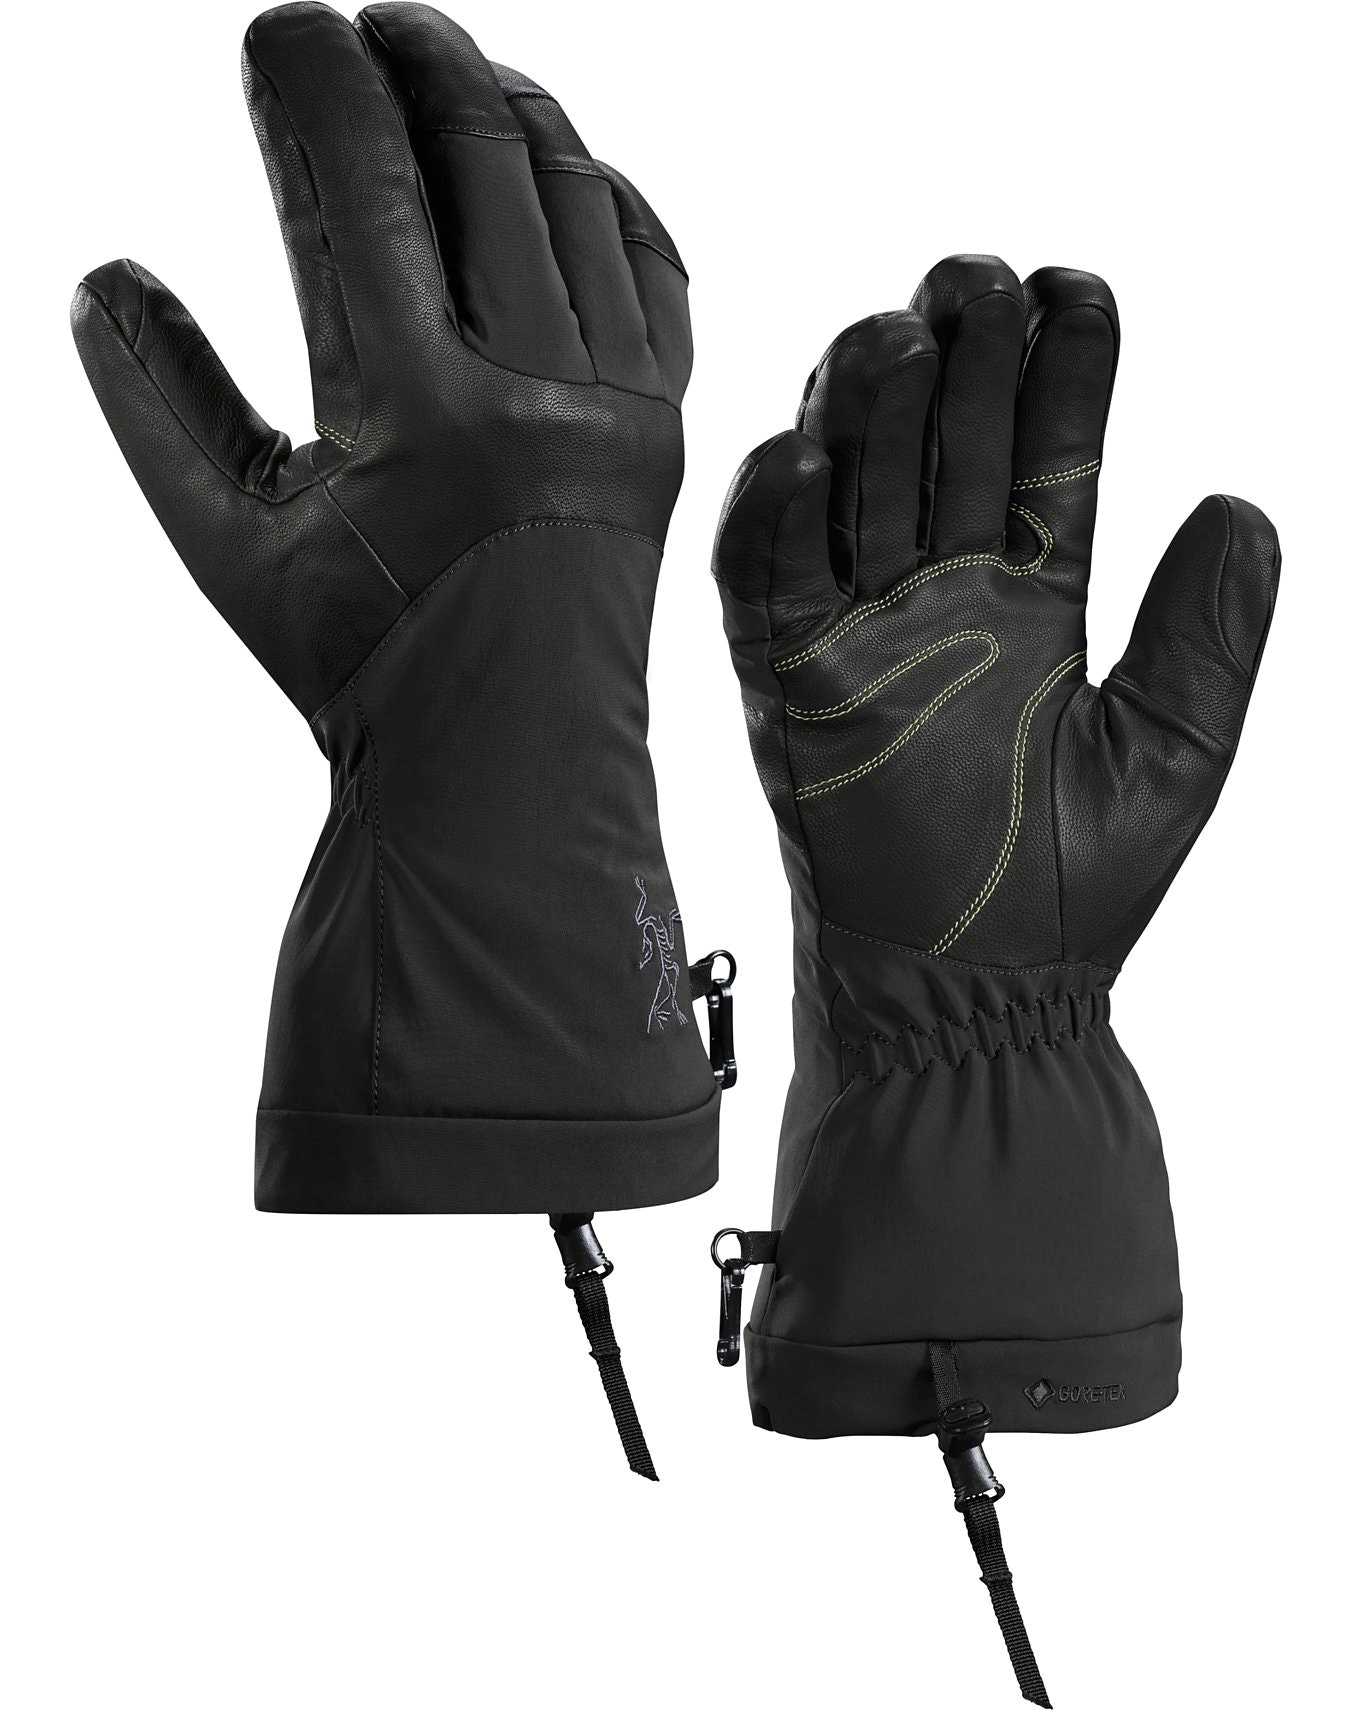 ArcTeryx Fission SV Glove Black/Infrared-0